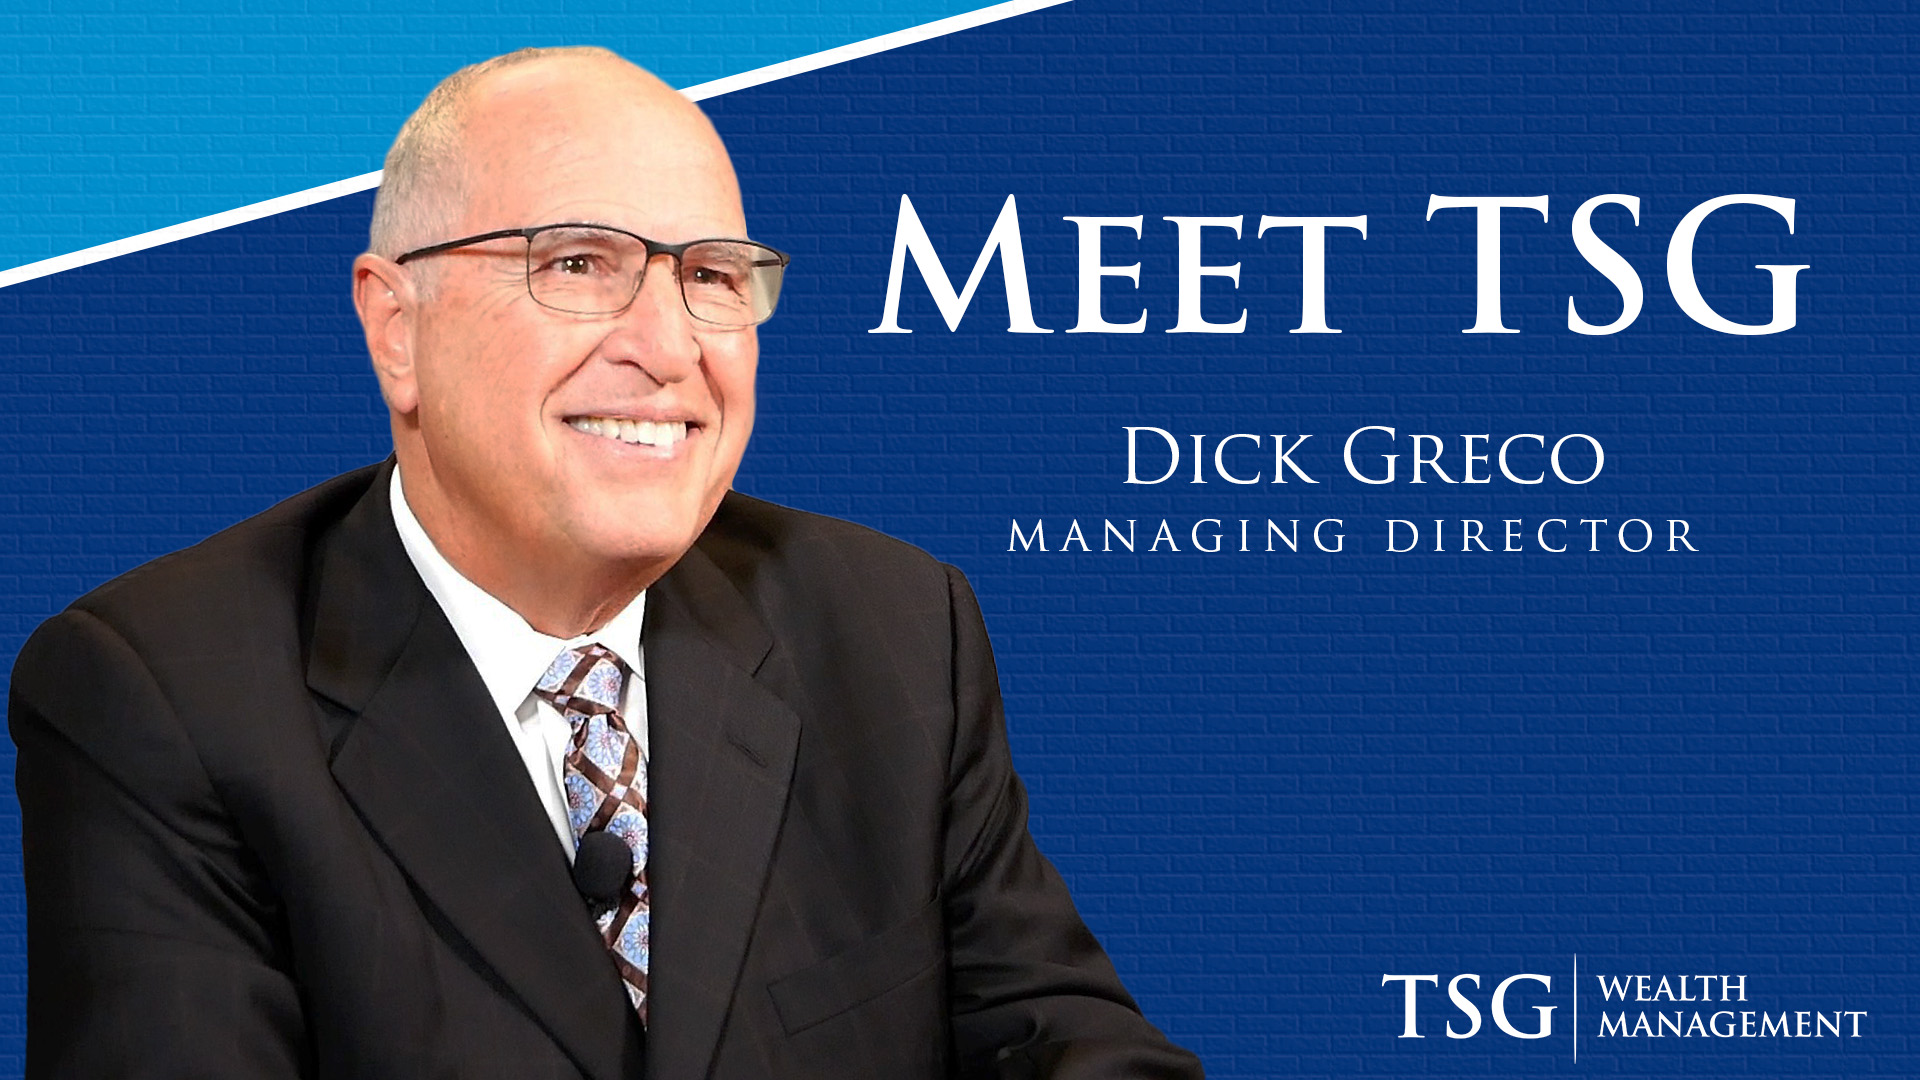 Meet TSG Managing Director Dick Greco